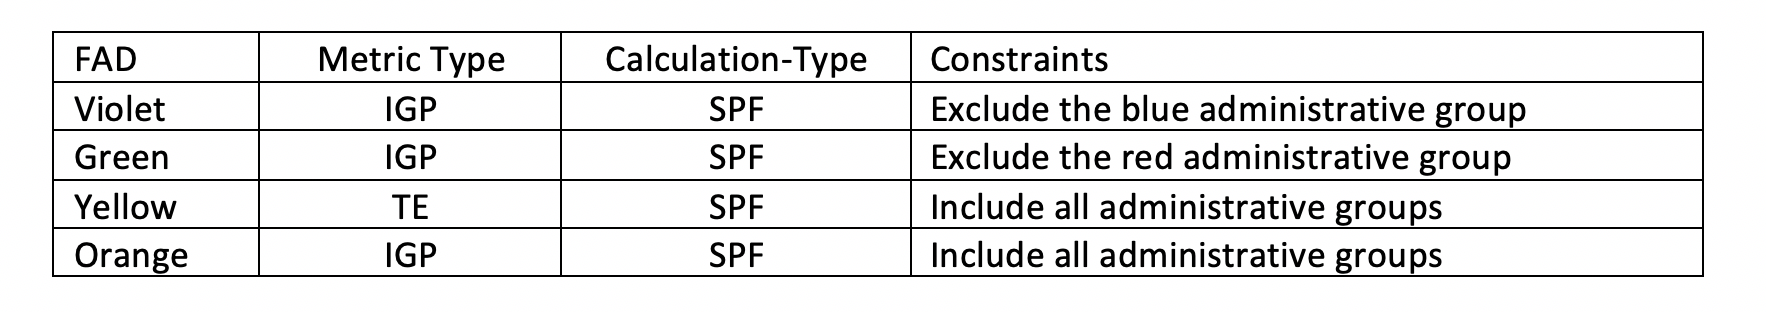 Table 4: Flexible Algorithm Definitions (FAD) for Use Case 2.